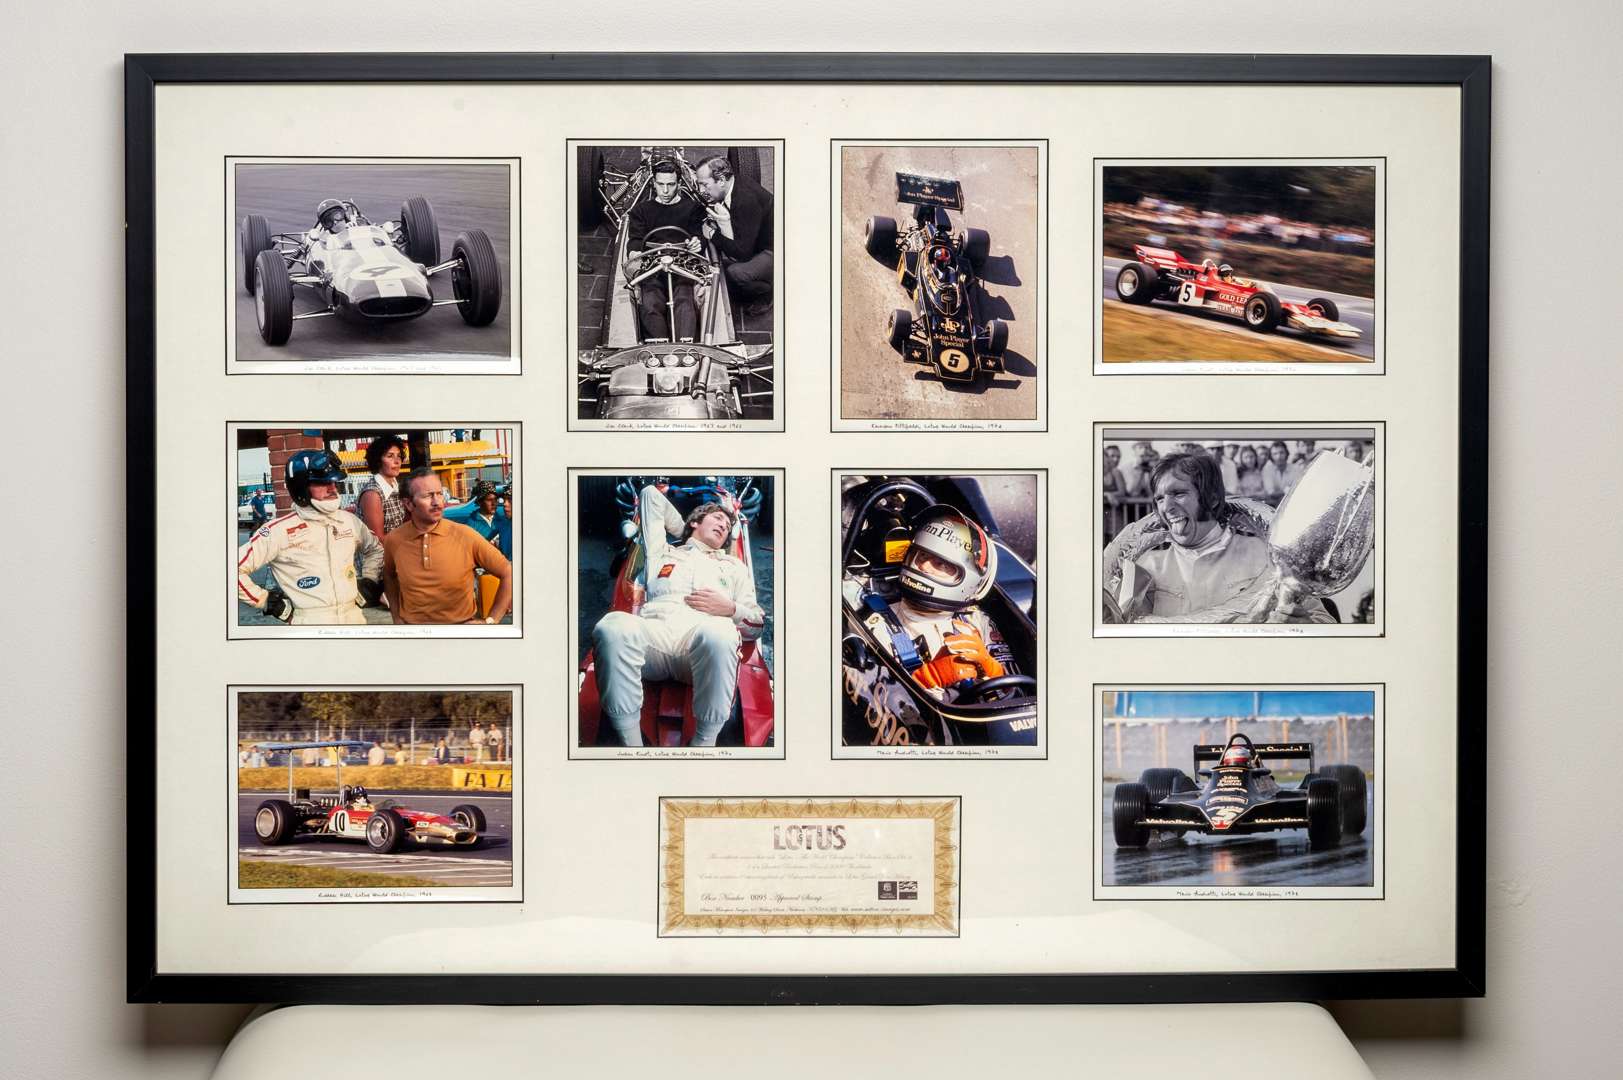 <p>LOTUS, a Sutton Motorsport Images limited edition framed montage, 0095/ 5000</p>